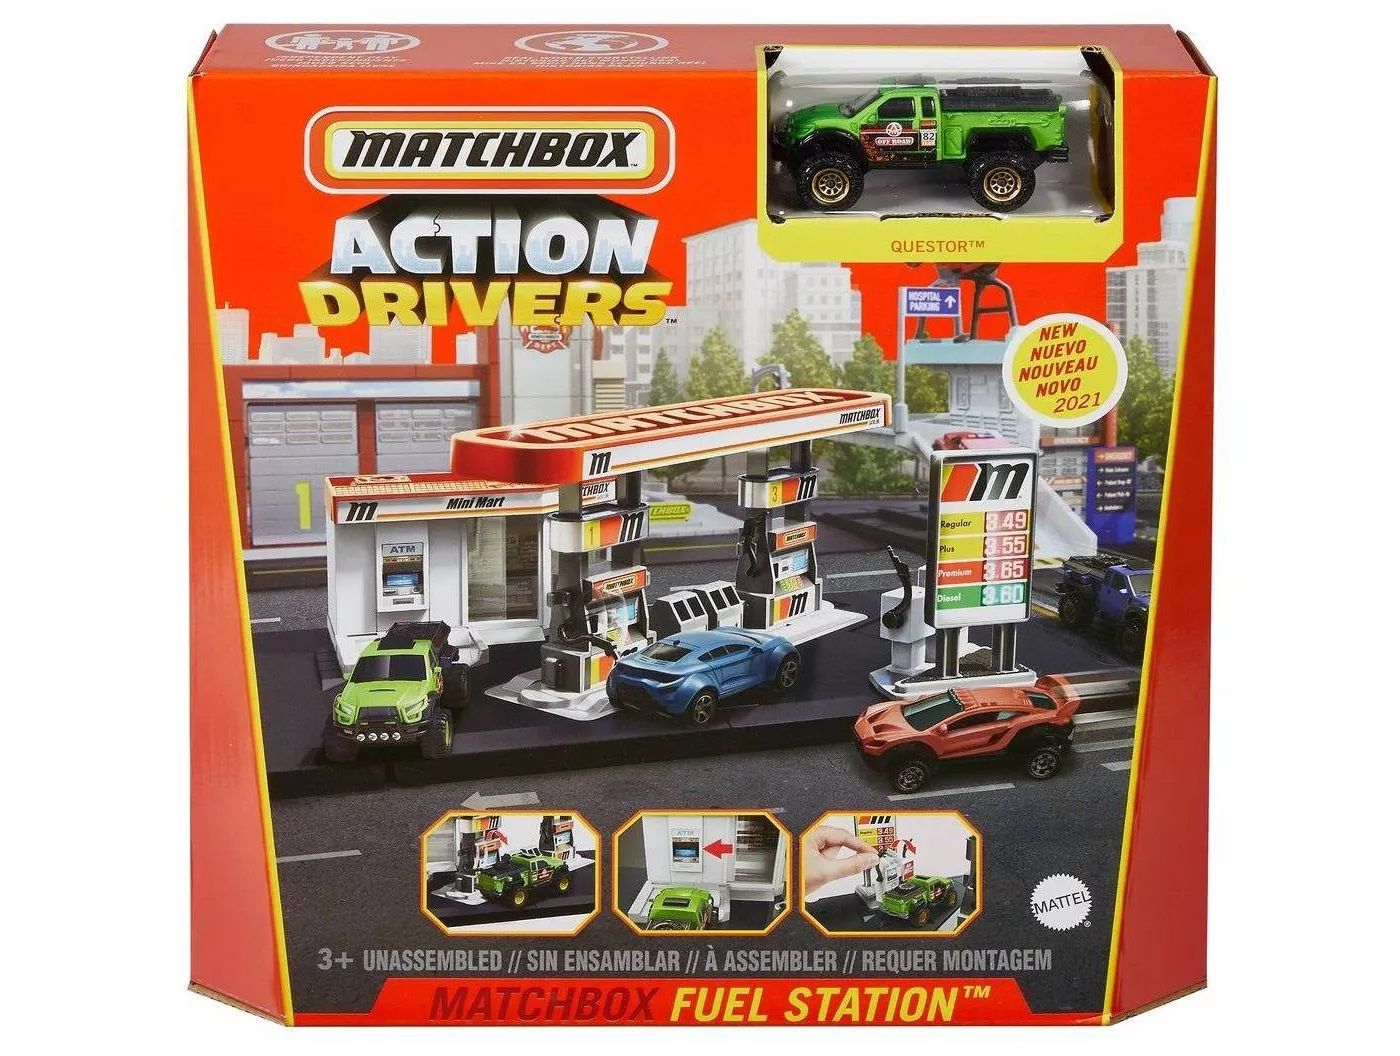 Matchbox Action Drivers Matchbox Fuel Station Playset GVY84